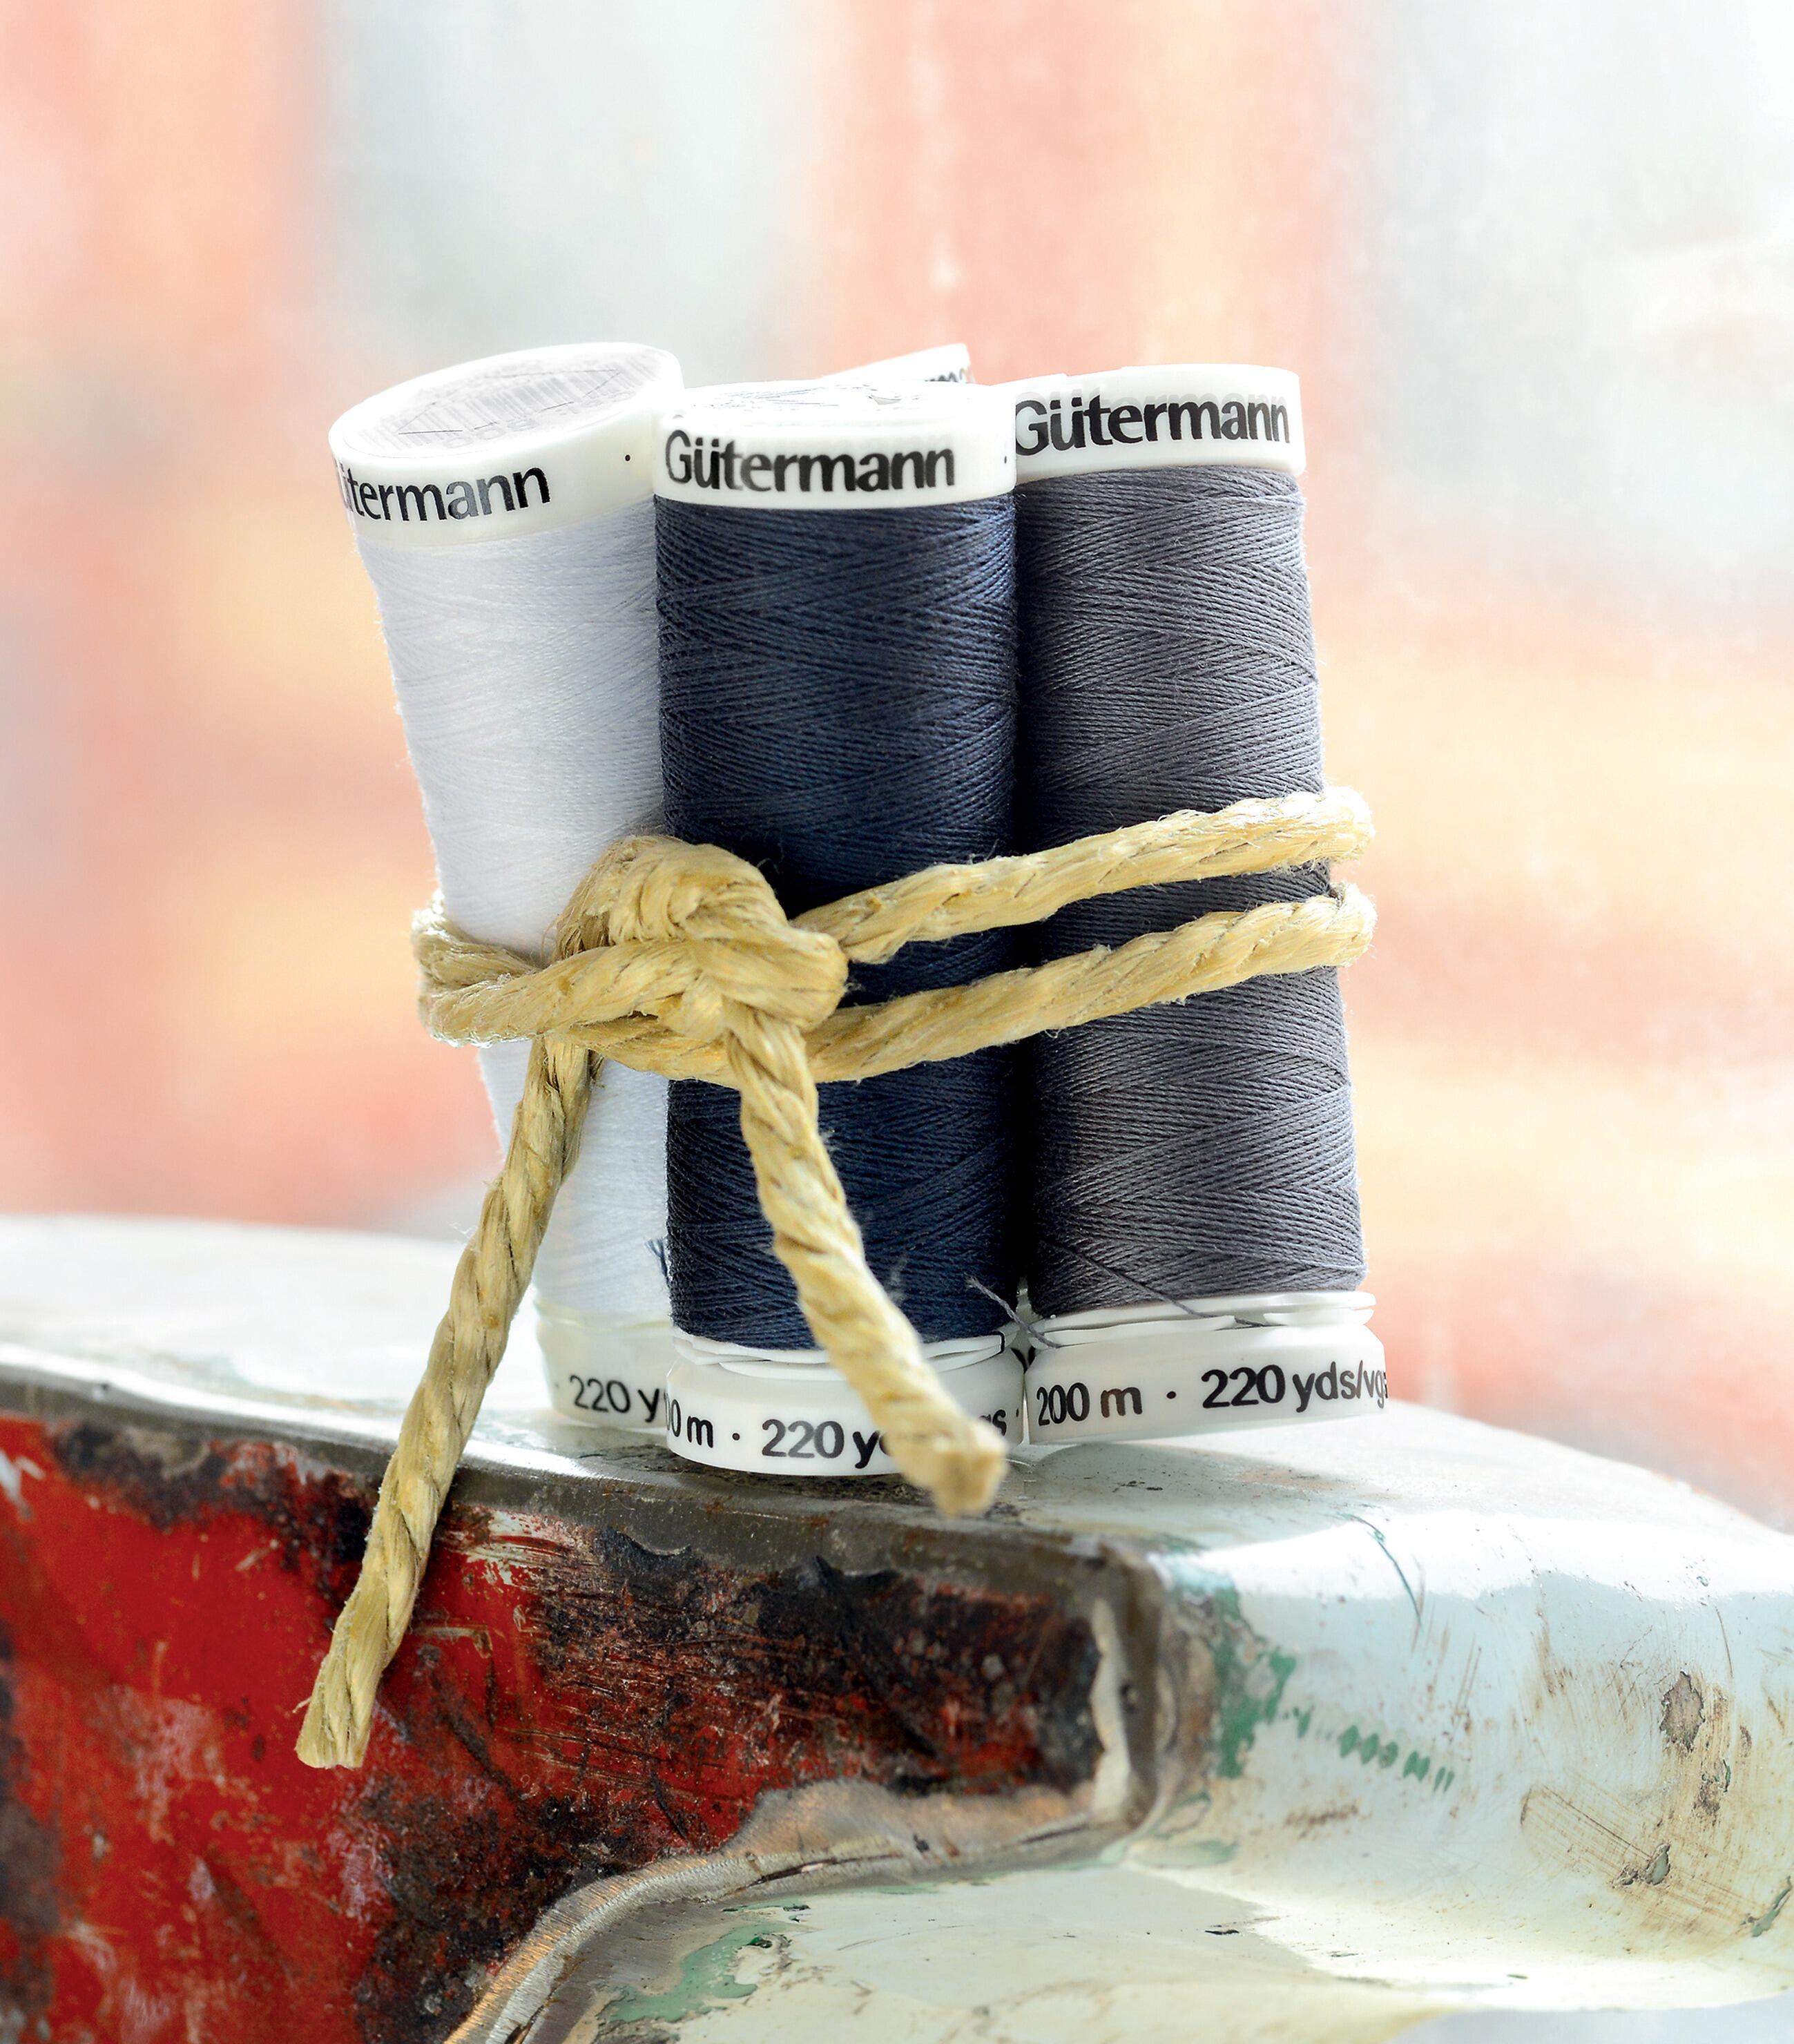 Gutermann Sew-All Poly Thread Black/White Assortment